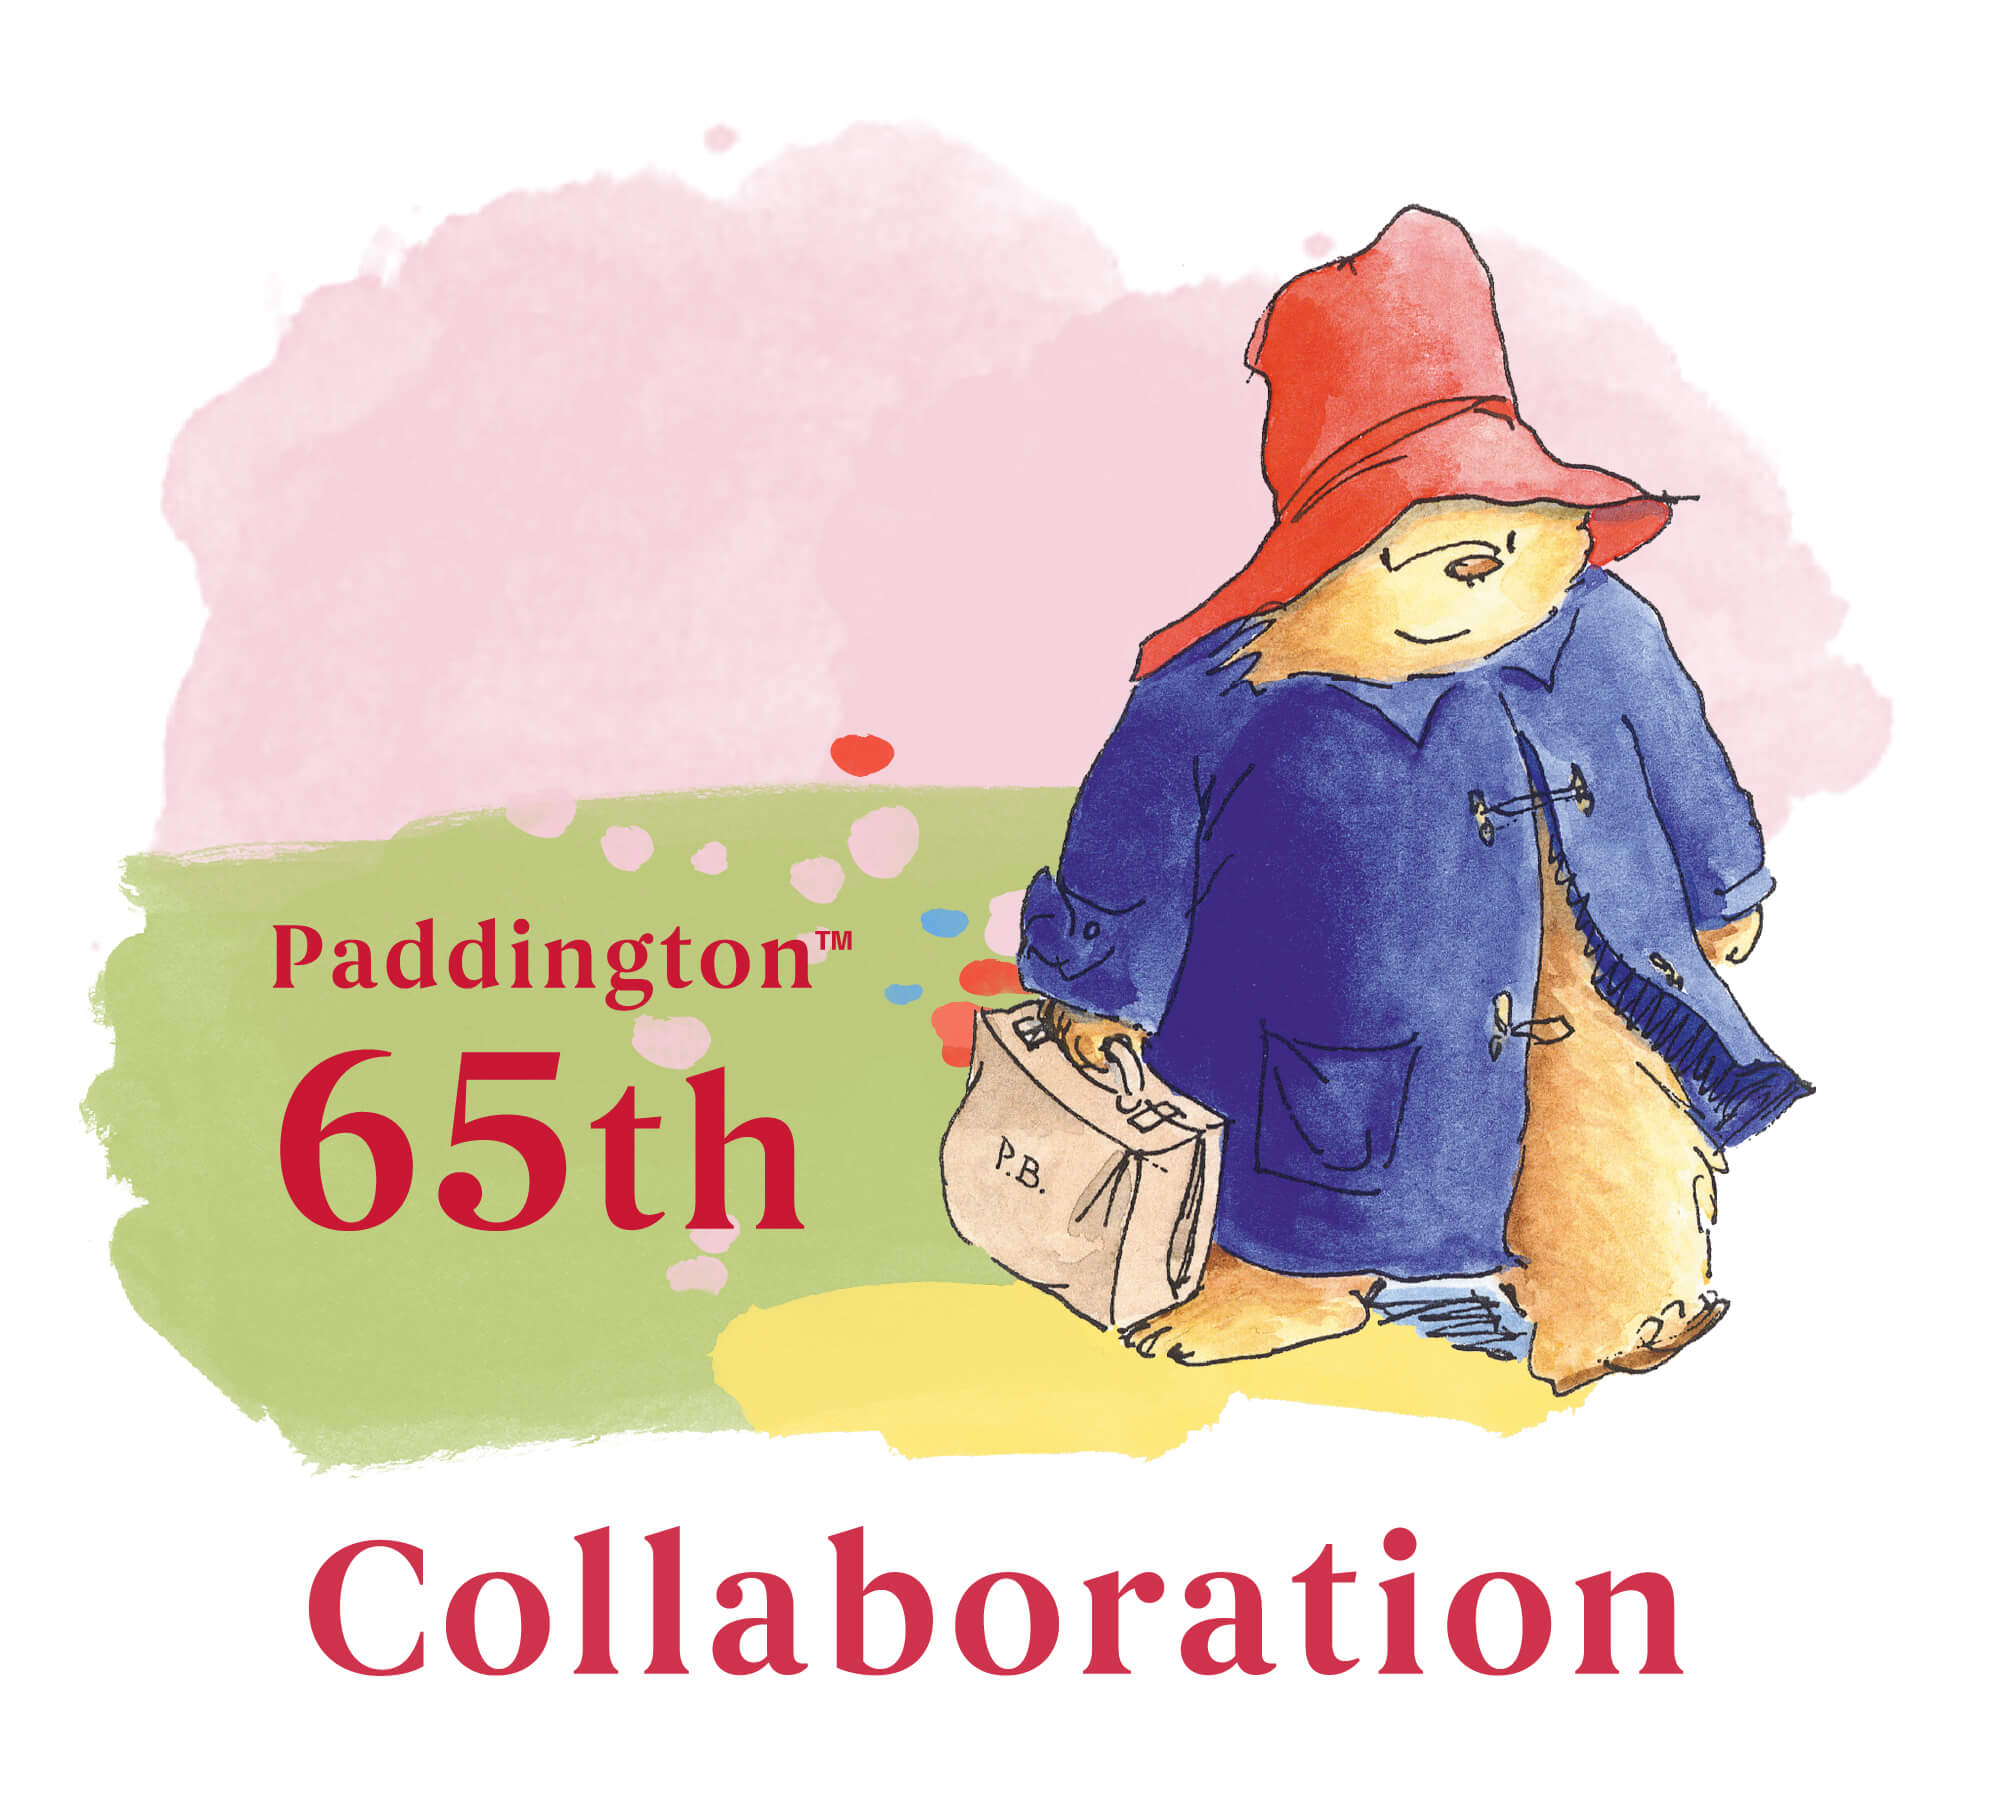 Paddington 65th Collaboration